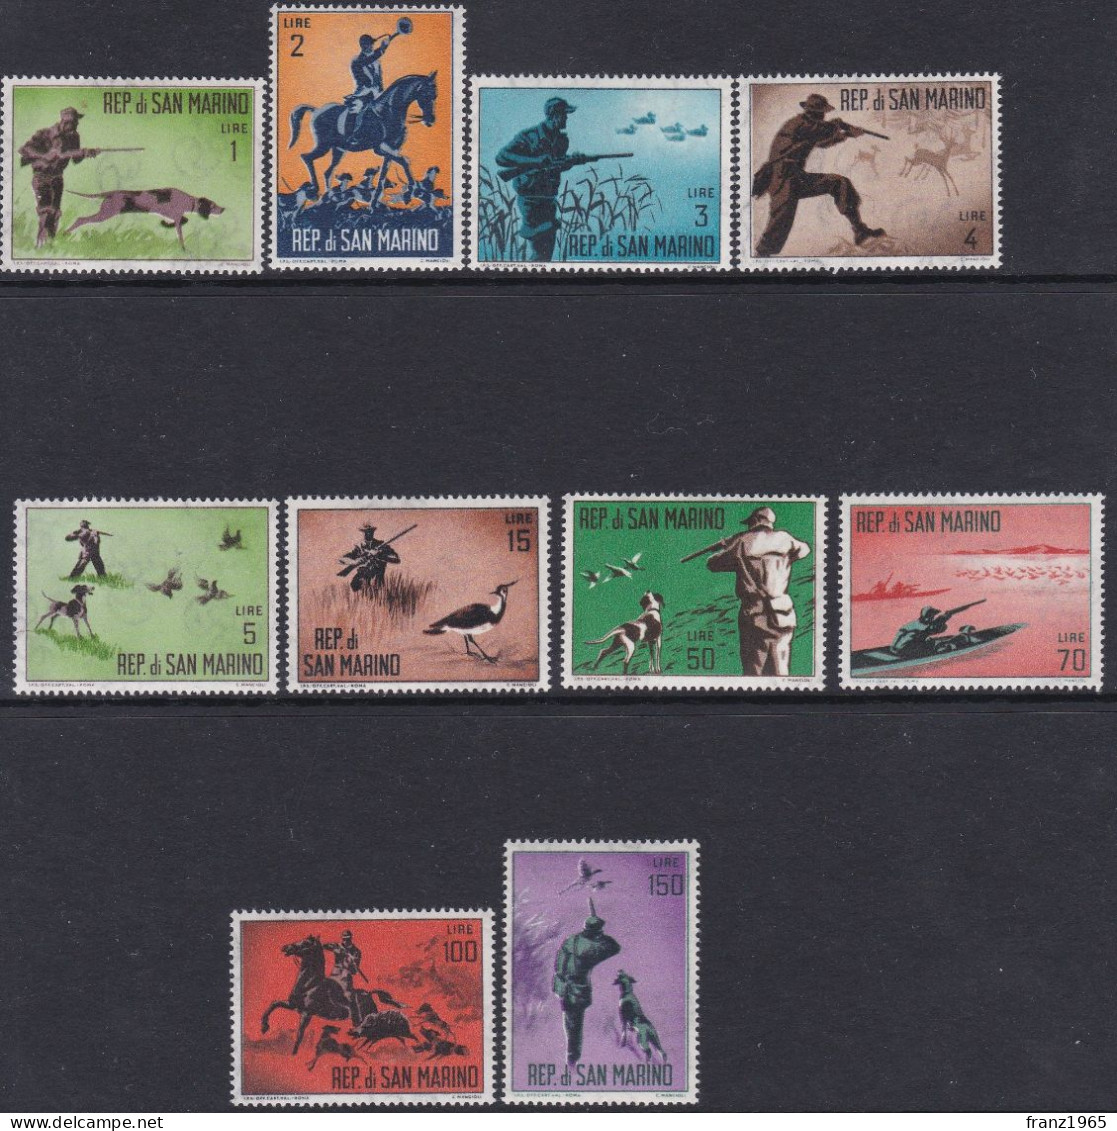 Hunting - 1962 - Unused Stamps